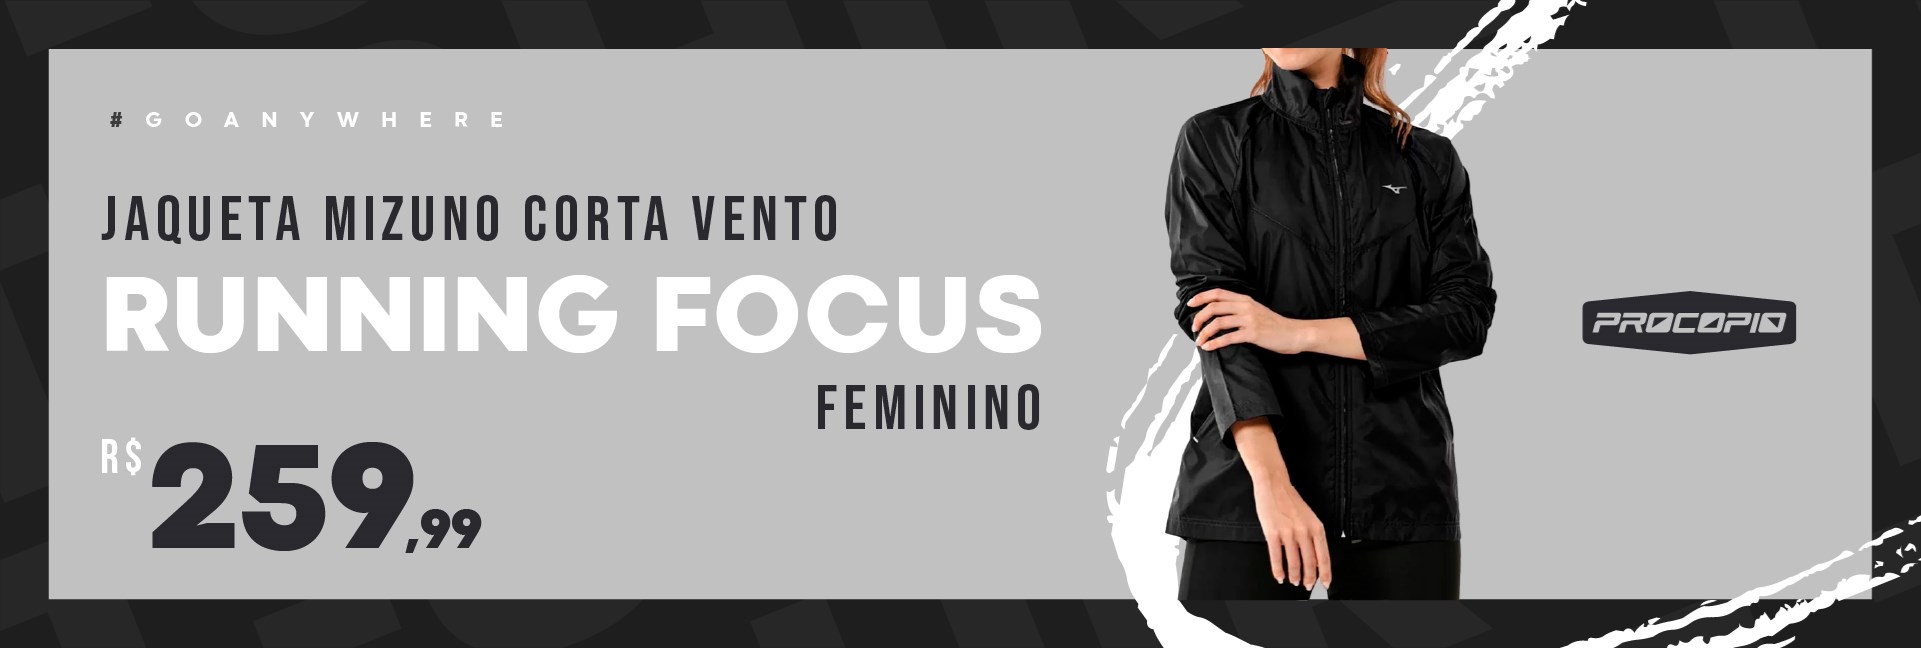 Jaqueta Mizuno Corta Vento Running Focus